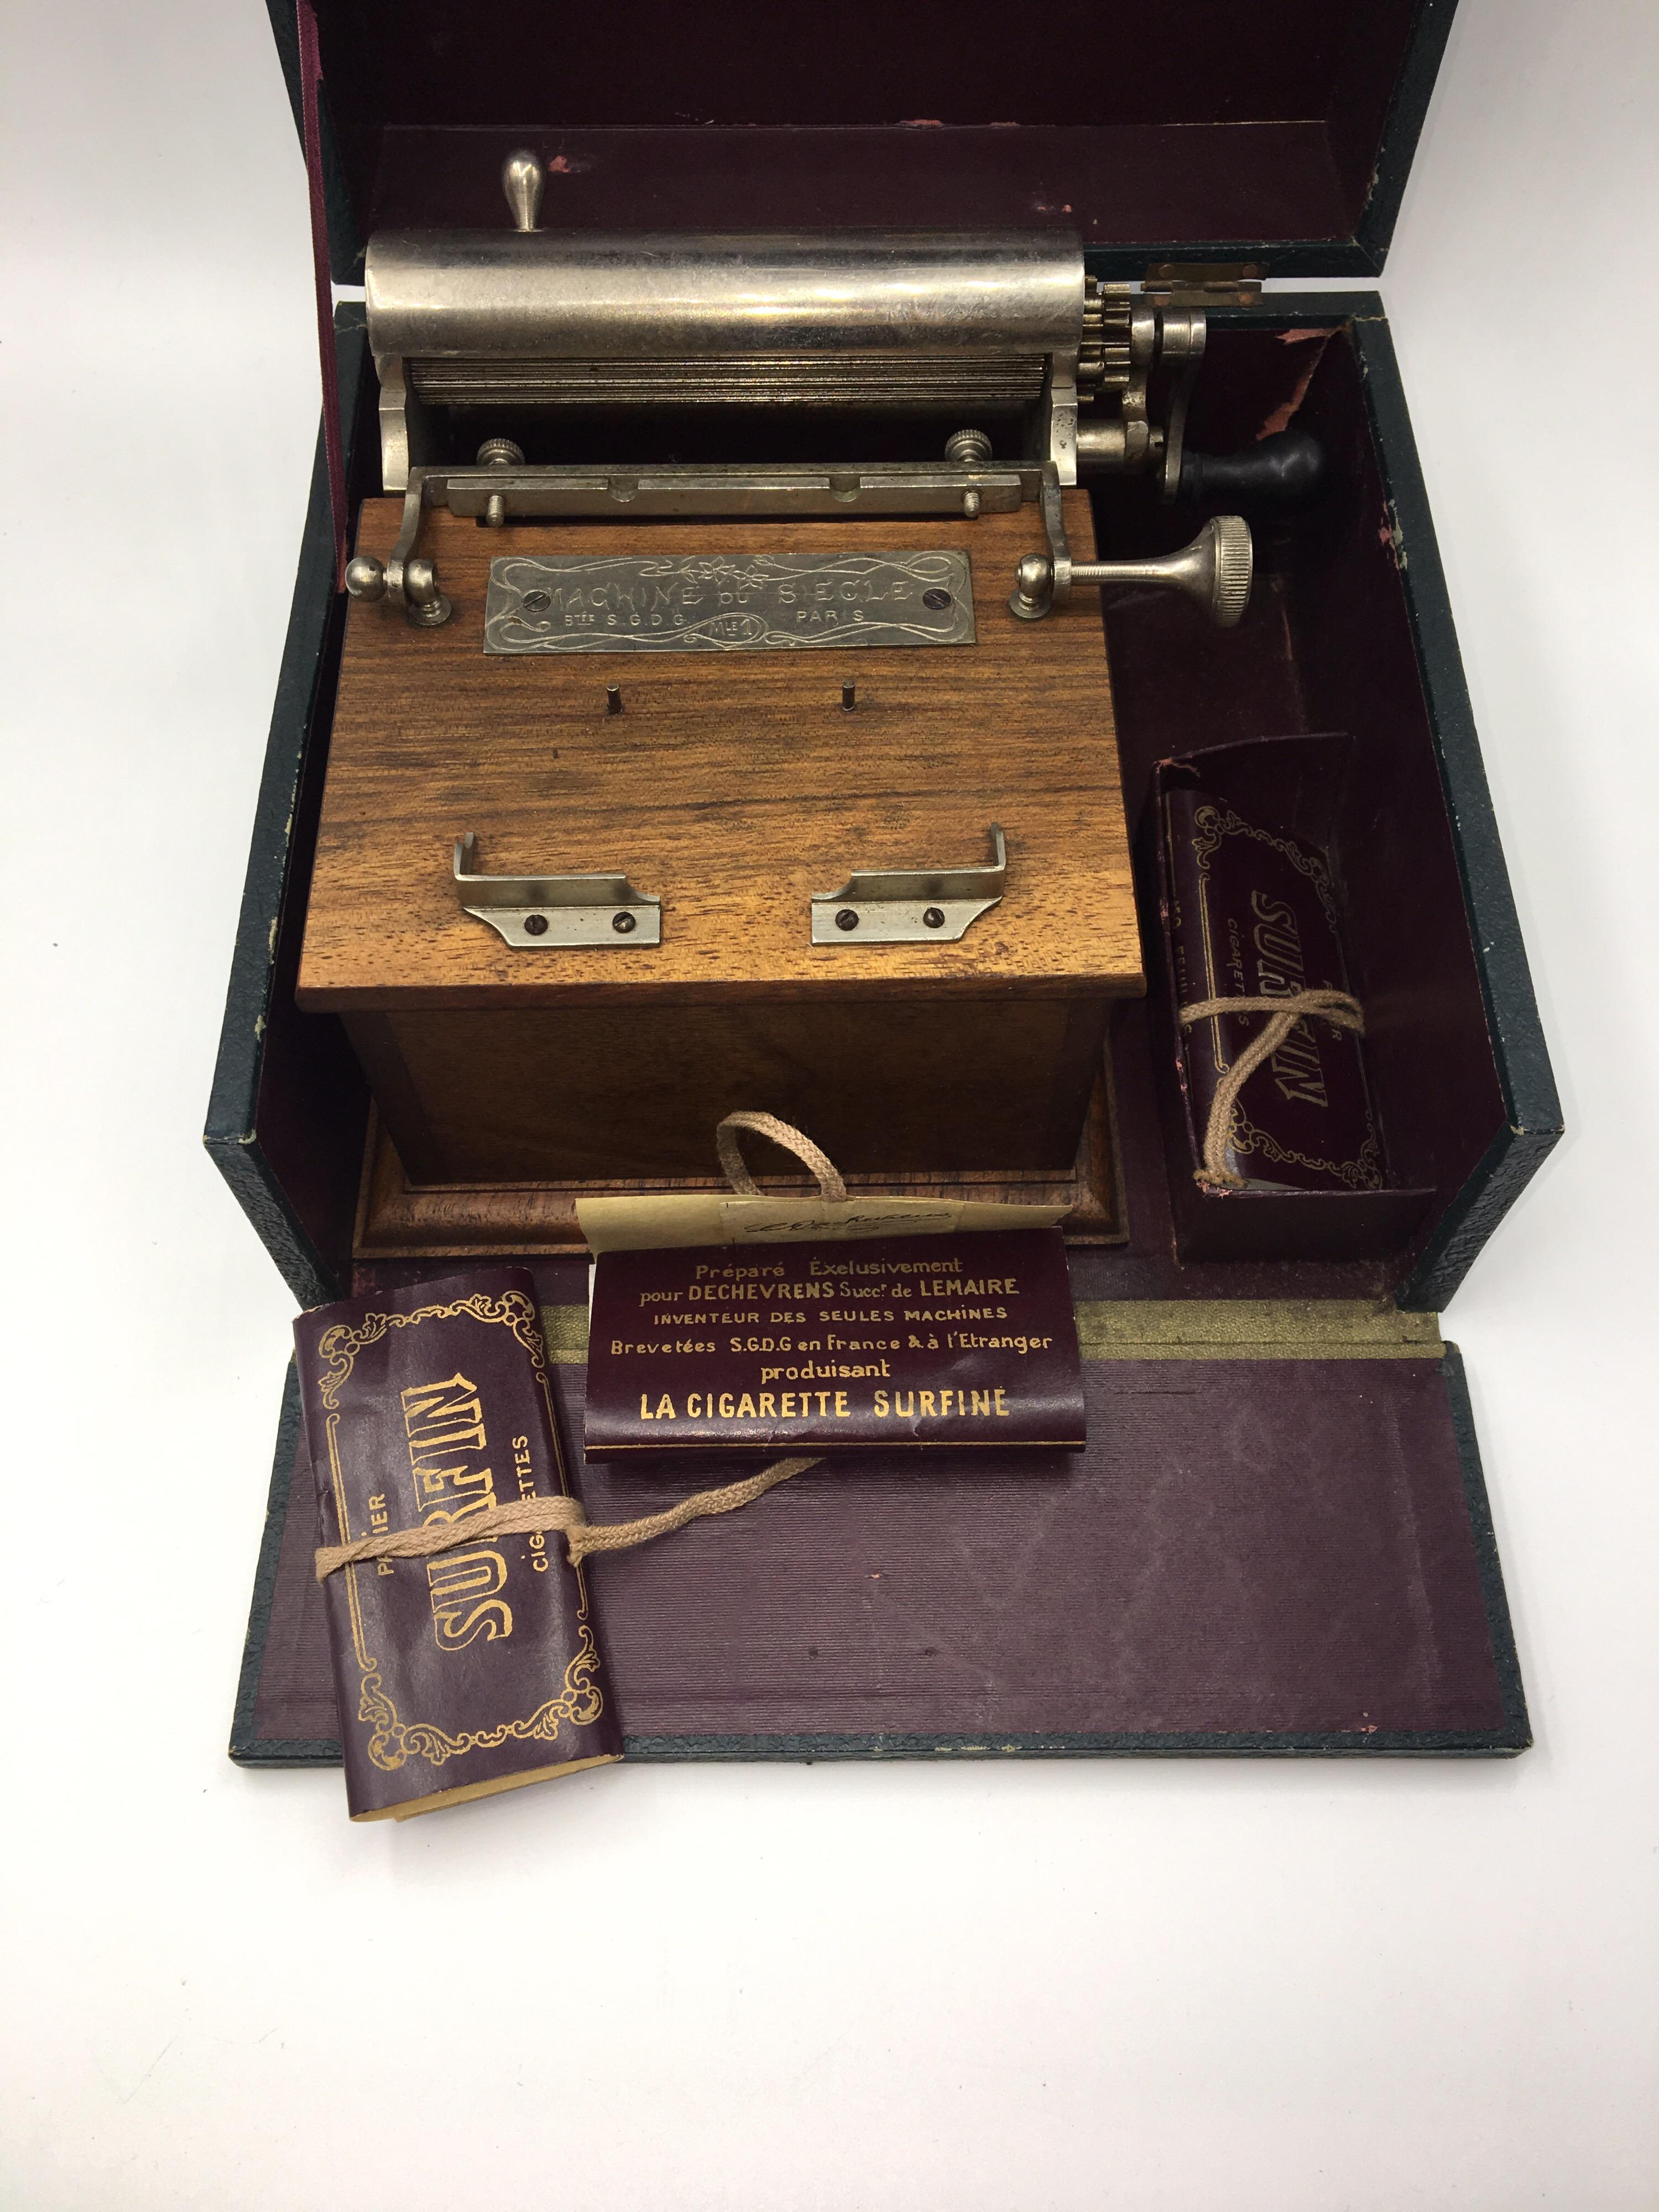 Very Rare 19th Century Cigarette Machine with Original Box, Du Siecle For Sale 2